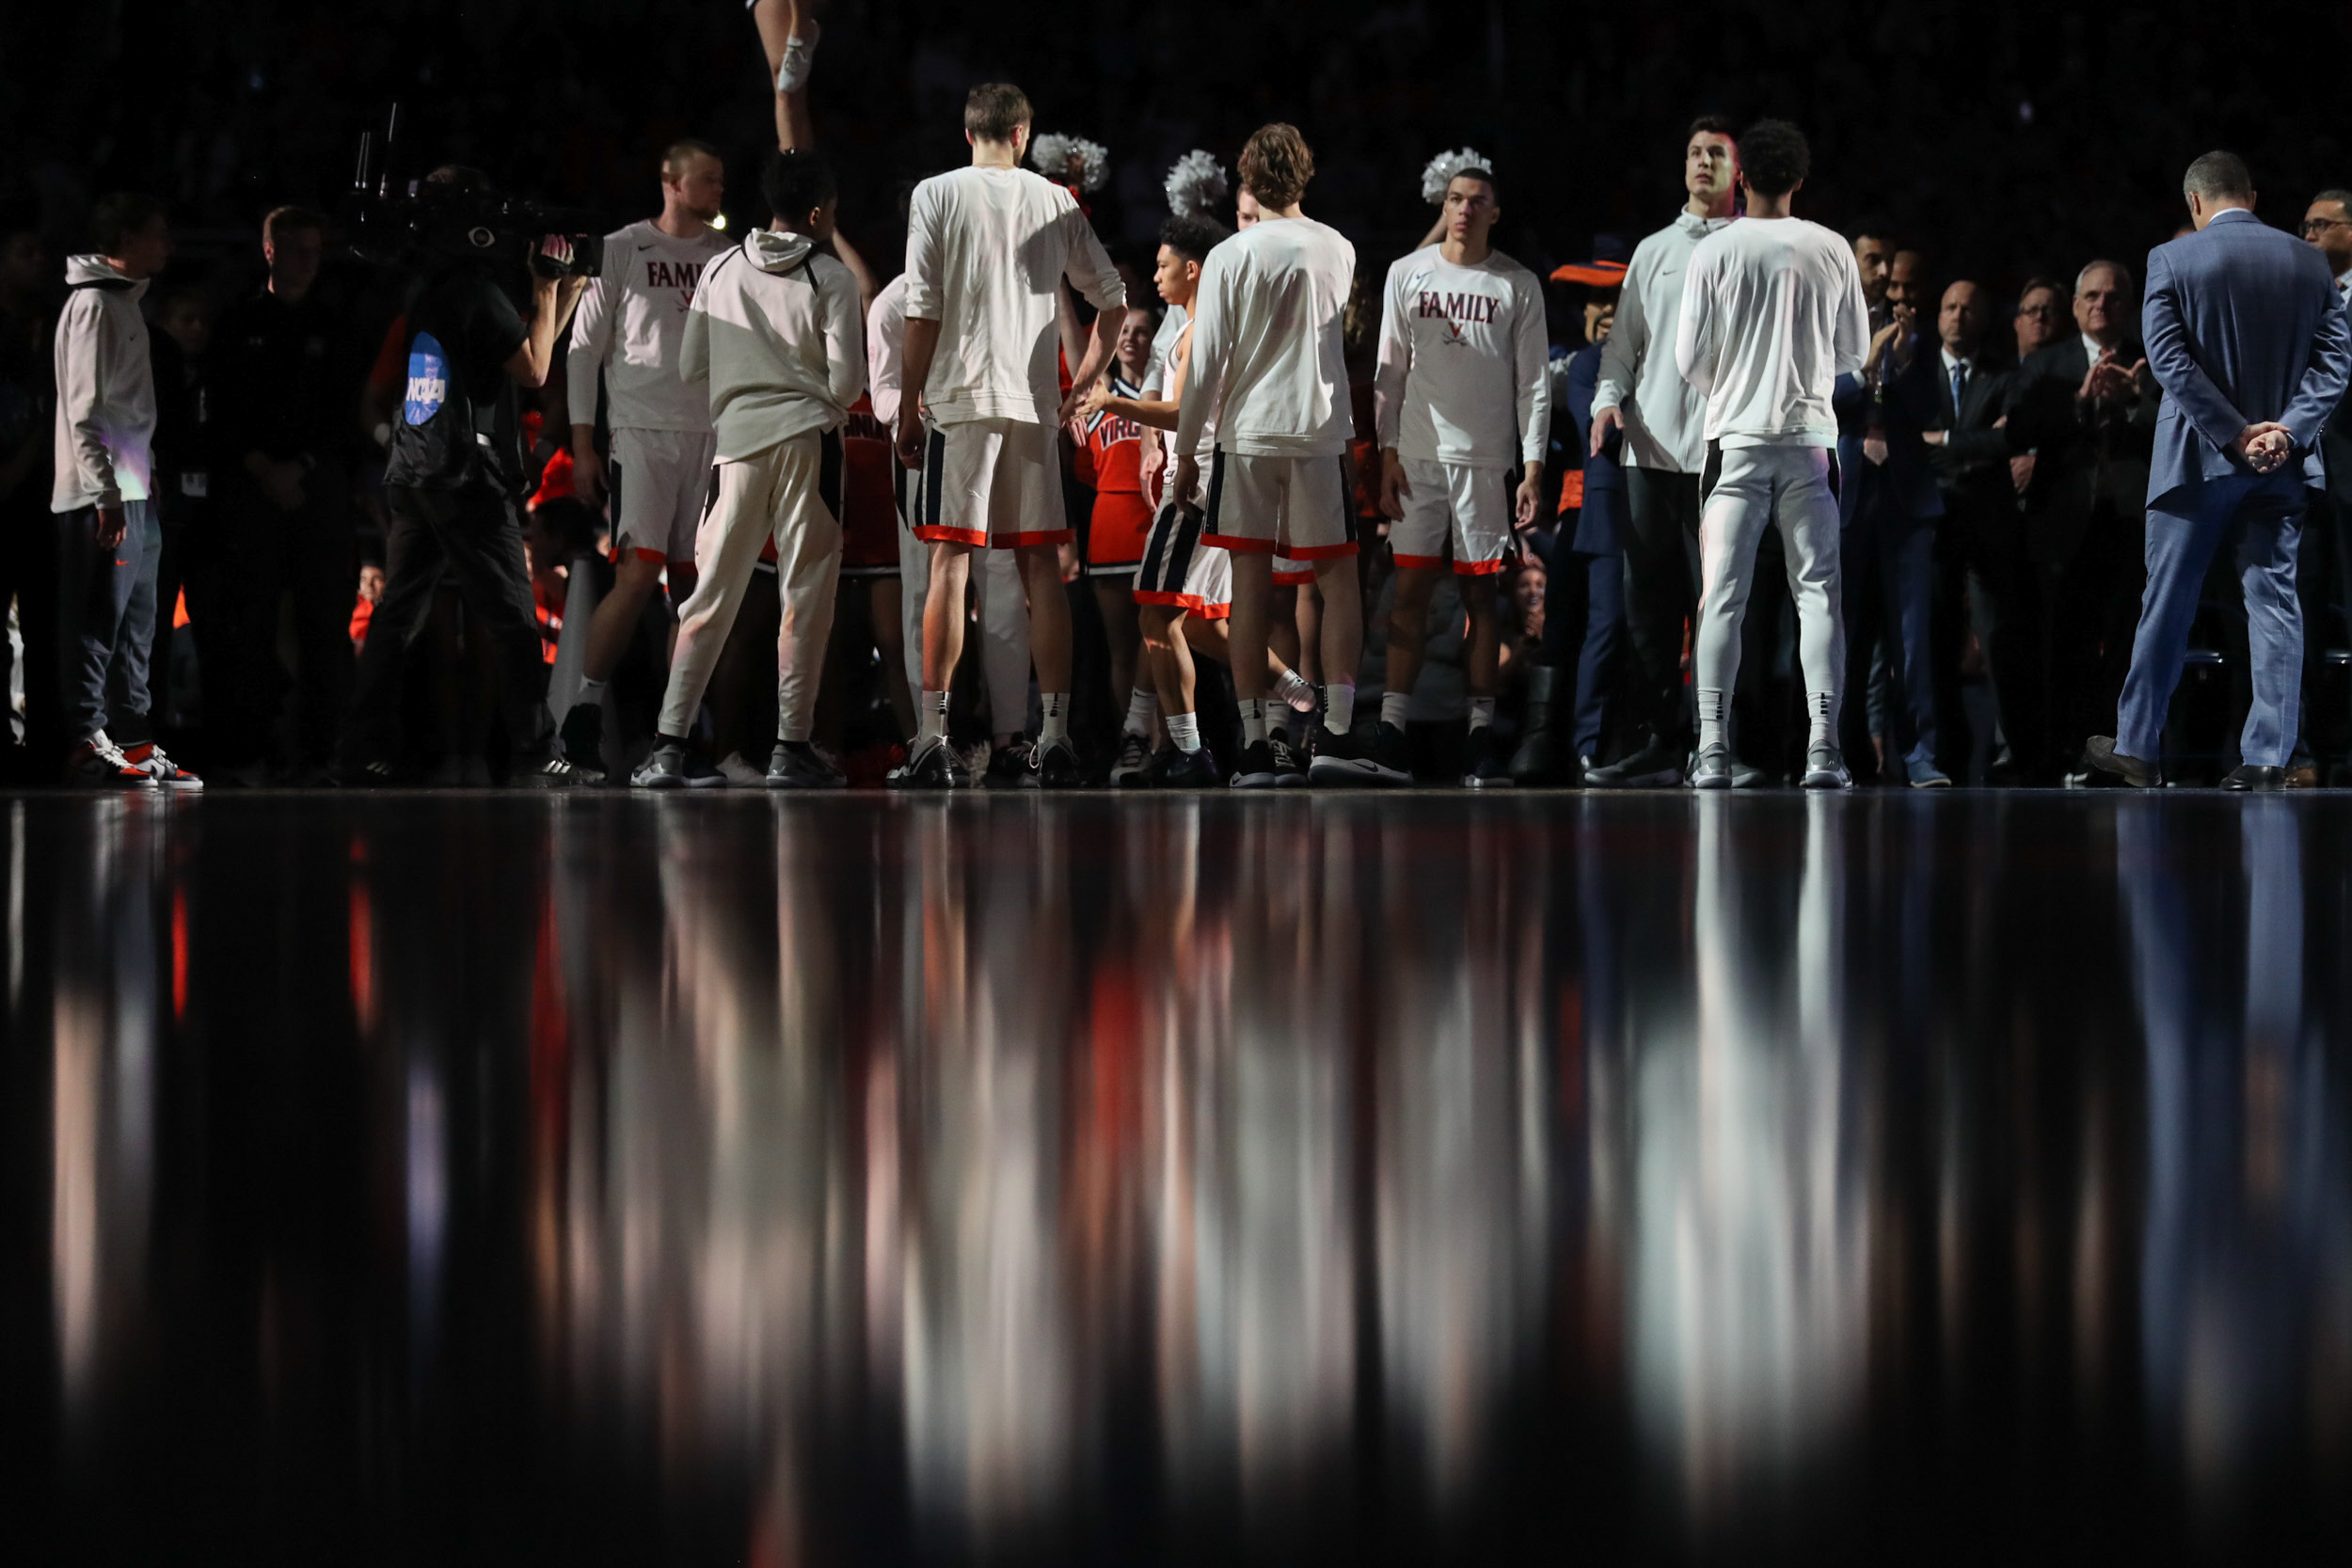 UVA basketball players standing together